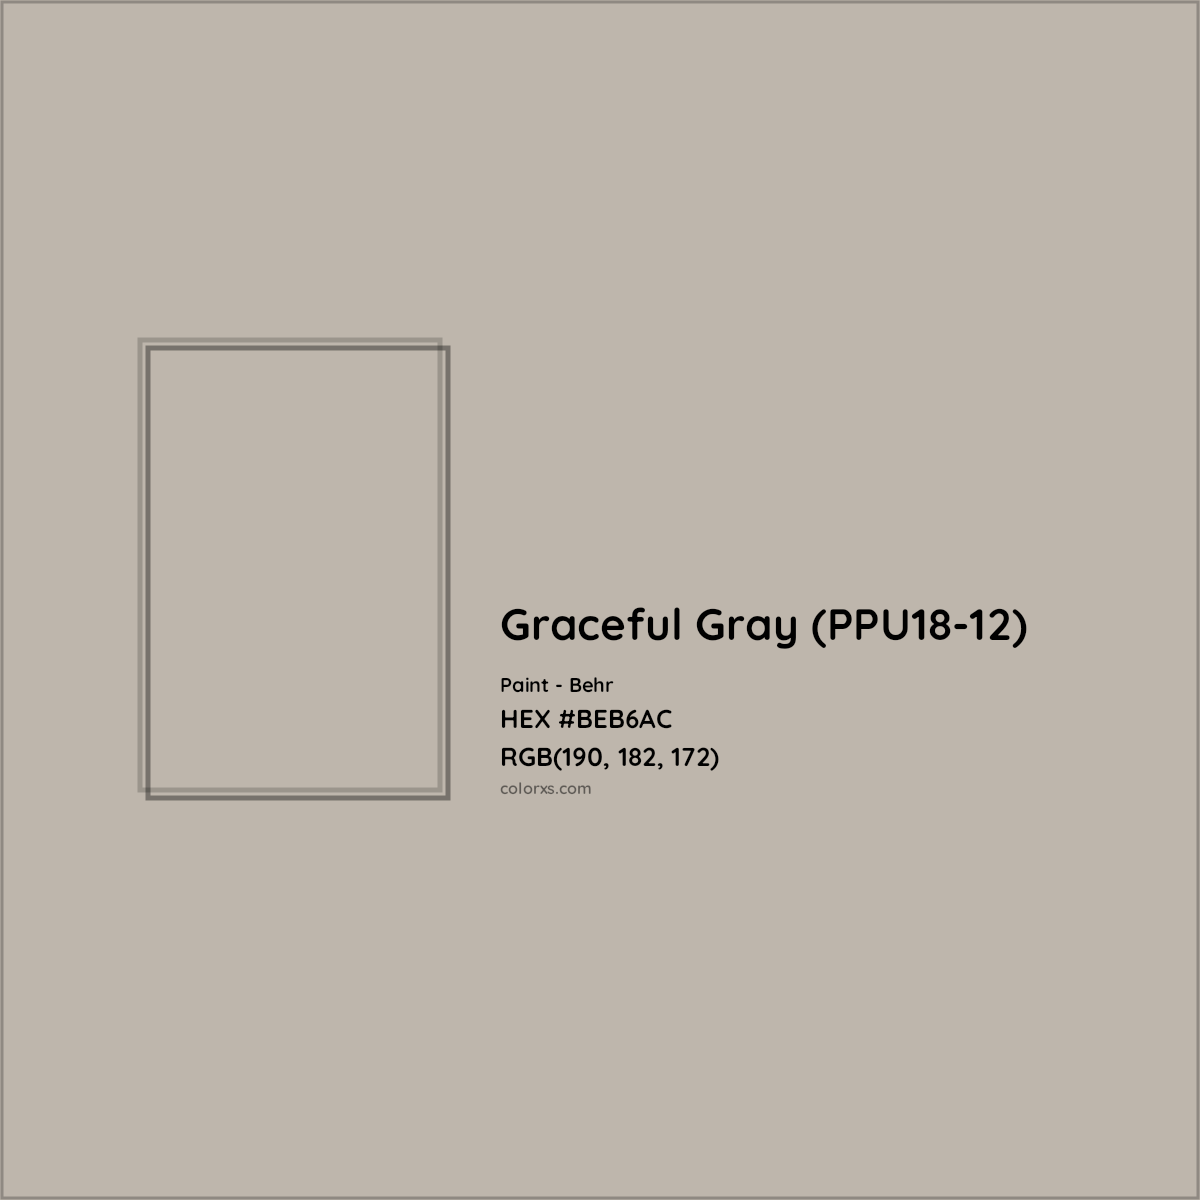 HEX #BEB6AC Graceful Gray (PPU18-12) Paint Behr - Color Code